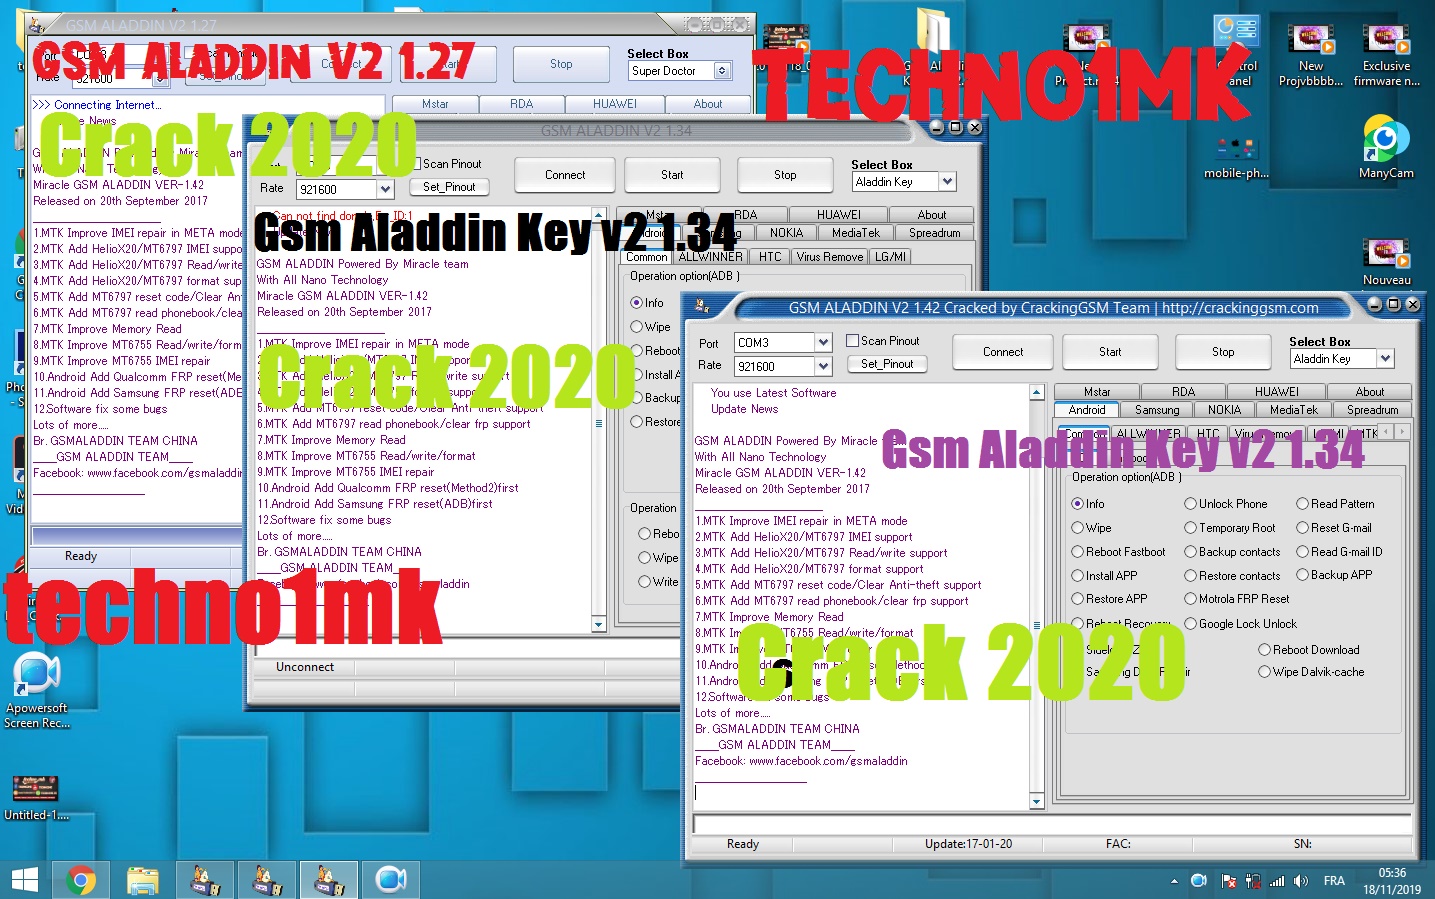 gsm aladdin v21.33 crack